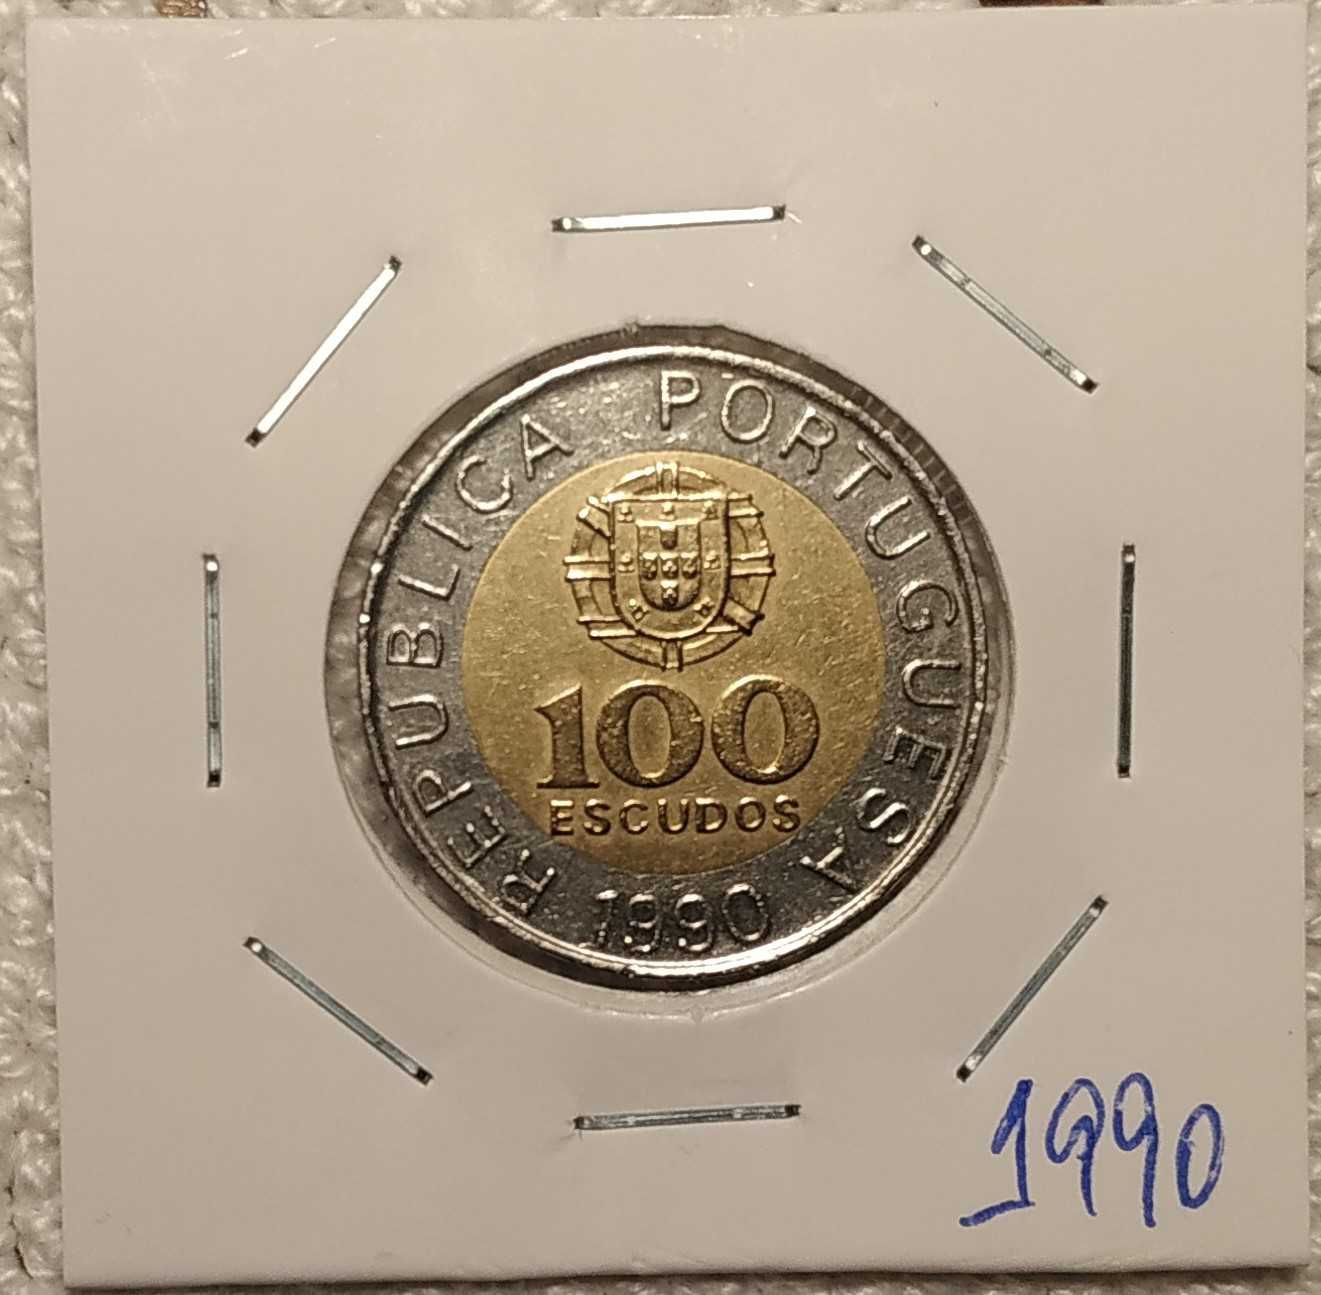 Portugal - moeda de 100 escudos de 1990